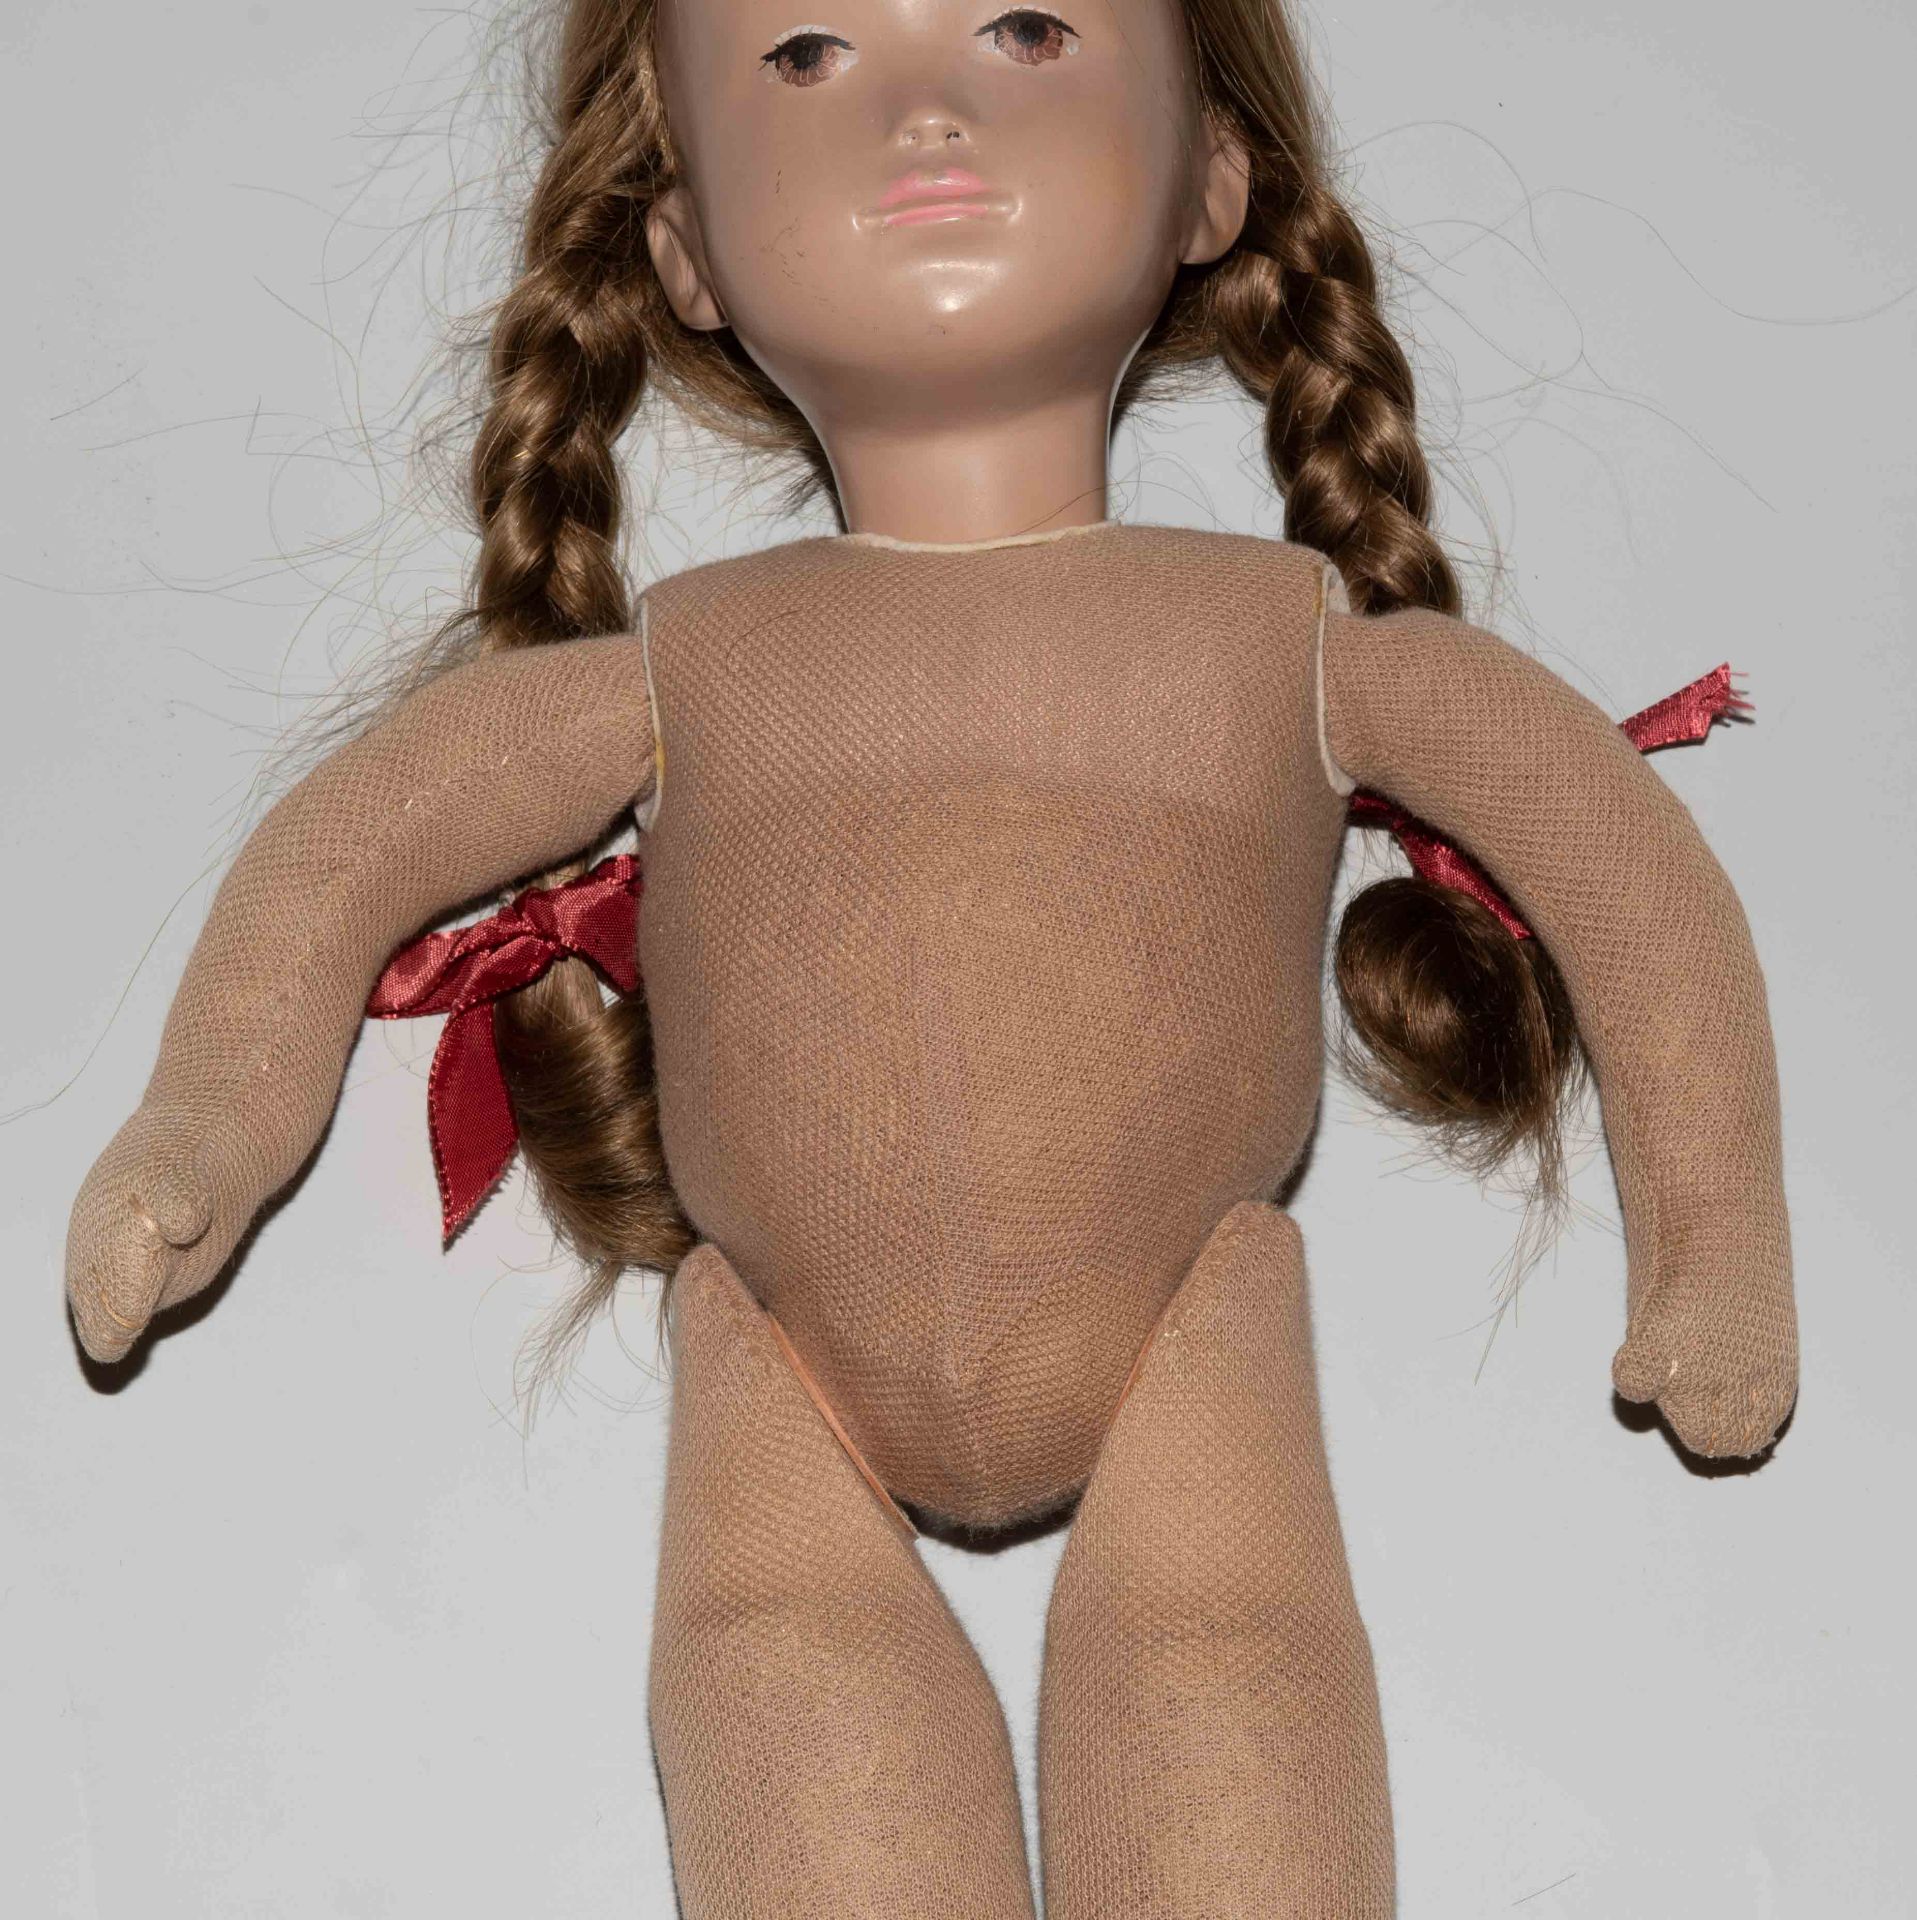 Sasha Morgenthaler, Puppe - Image 4 of 10